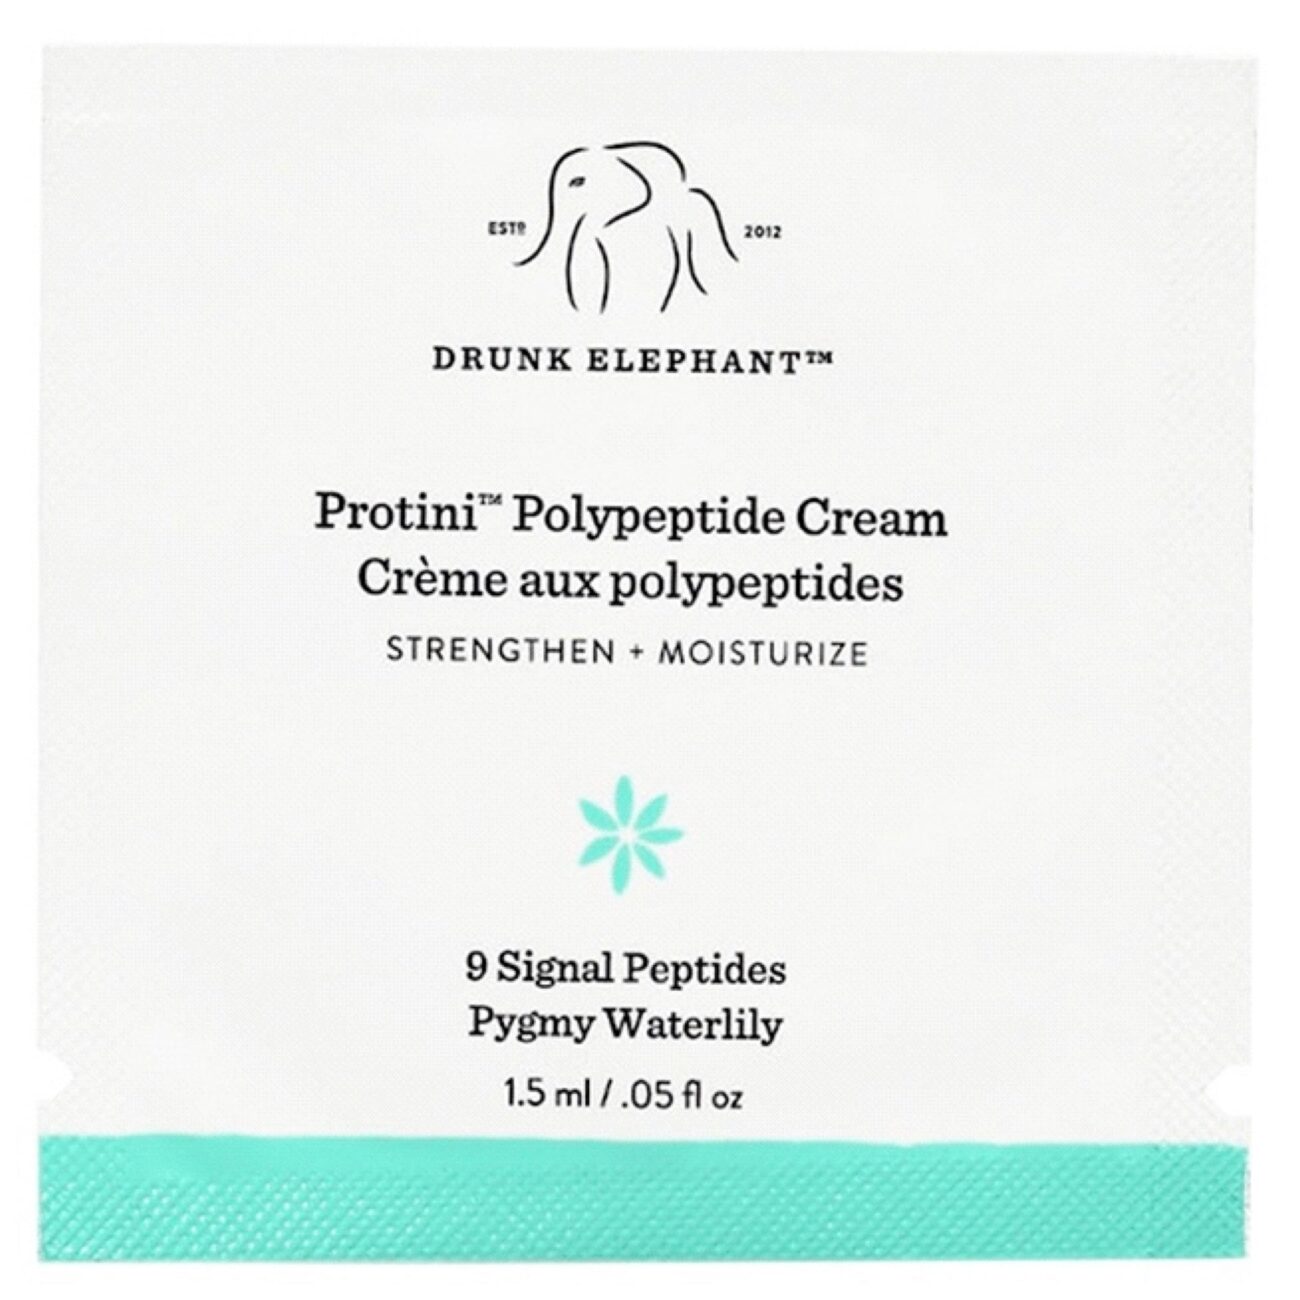 Drunk Elephant Protini Polypeptide Cream package image.